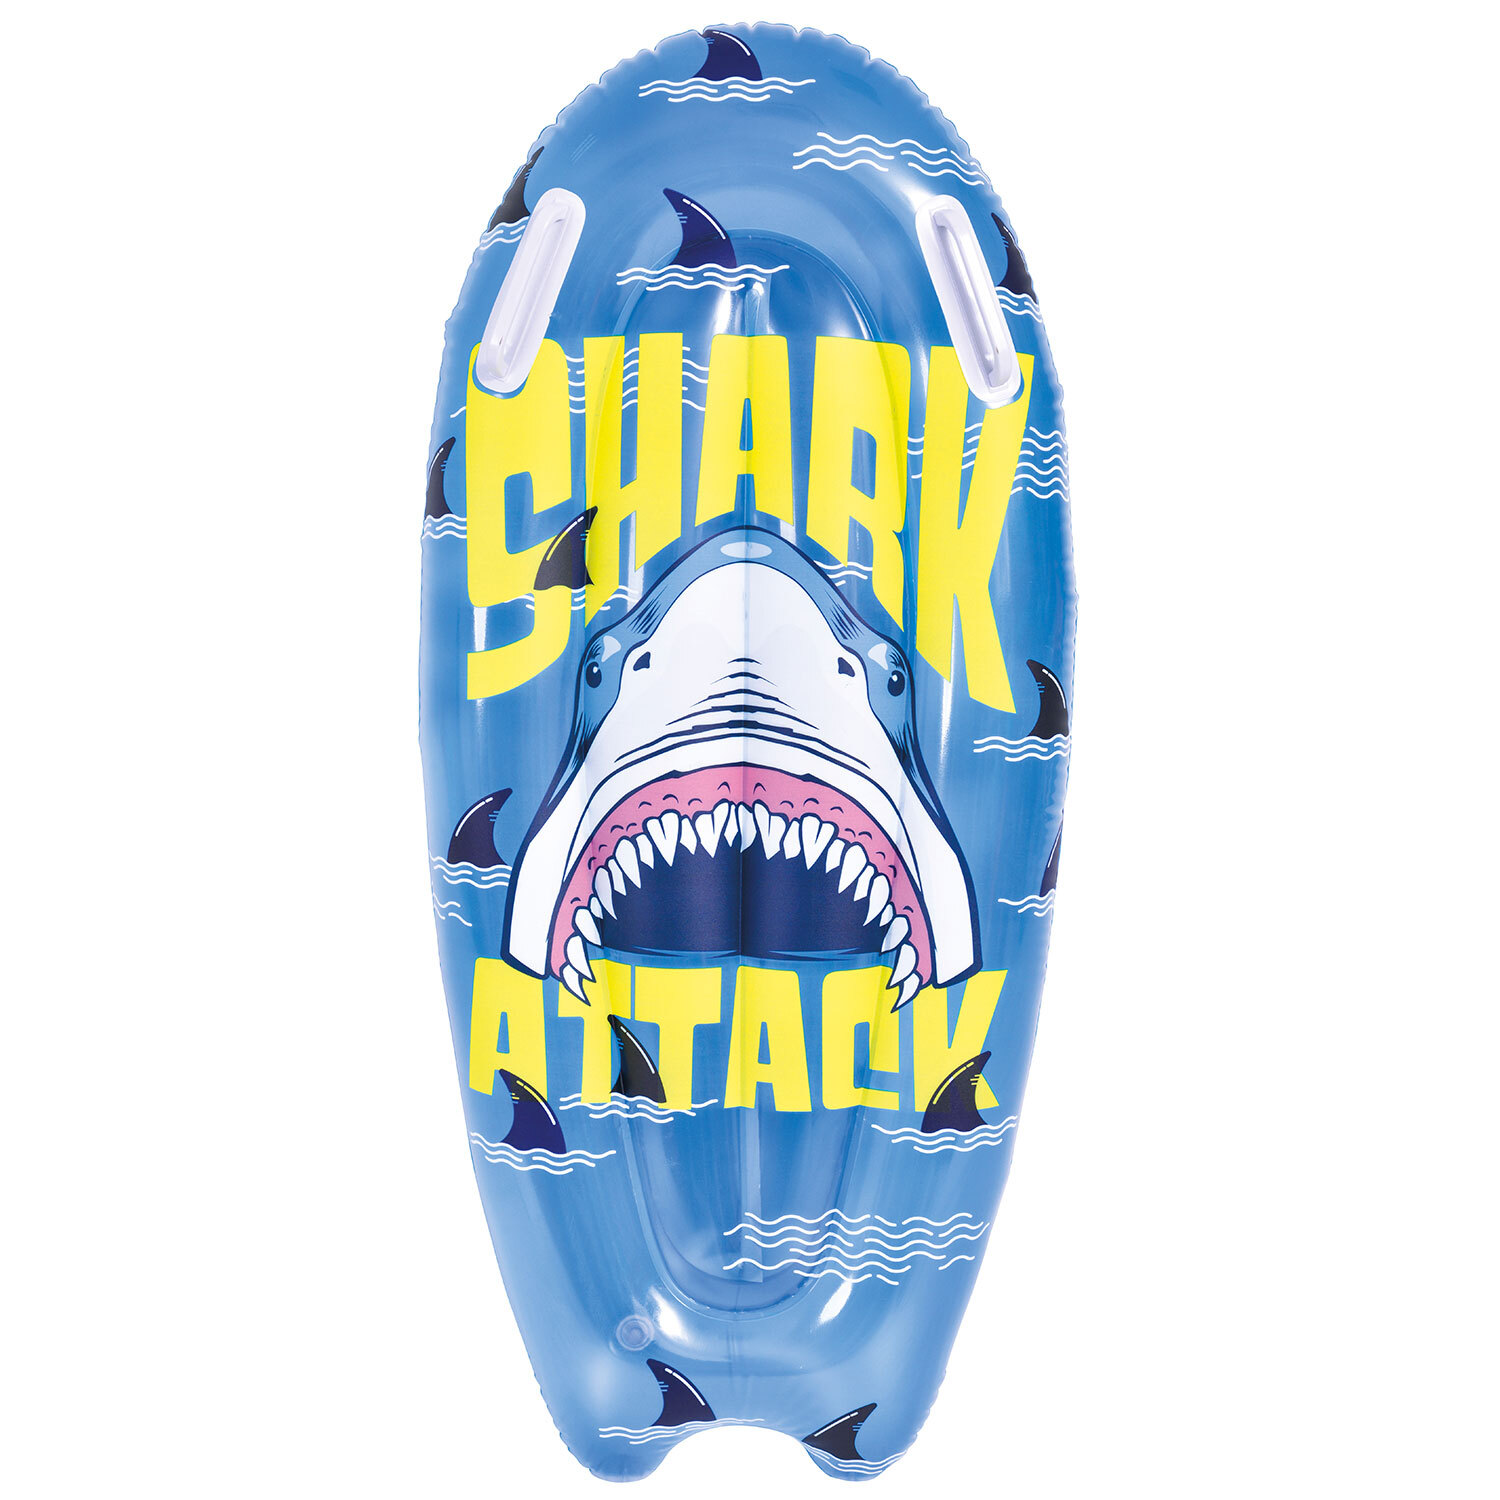 Sunclub PVC Shark Surfboard with Handle Image